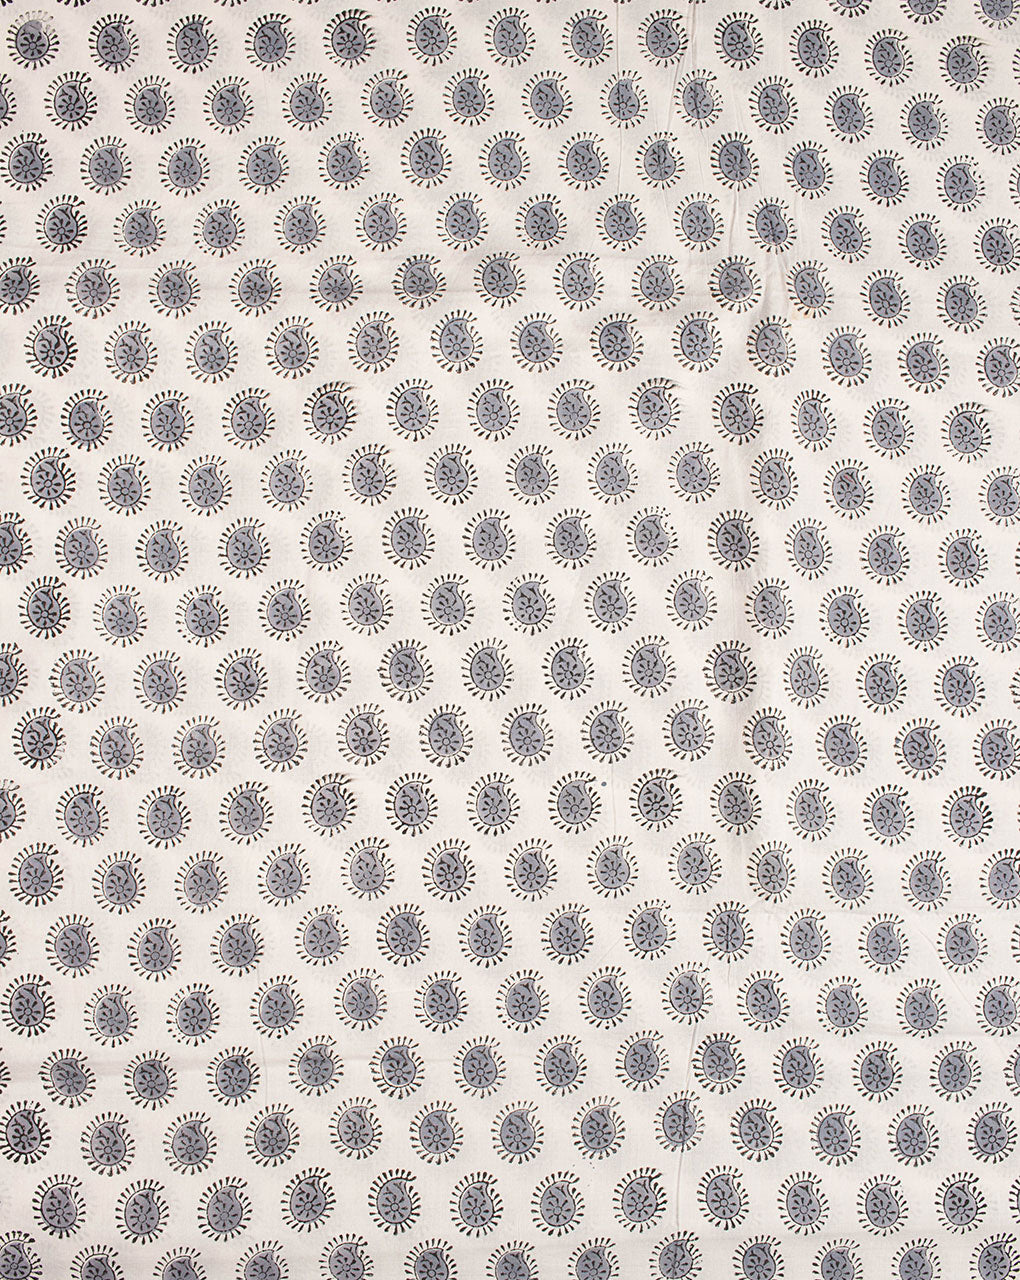 Paisley Hand Block Cotton Fabric - Fabriclore.com